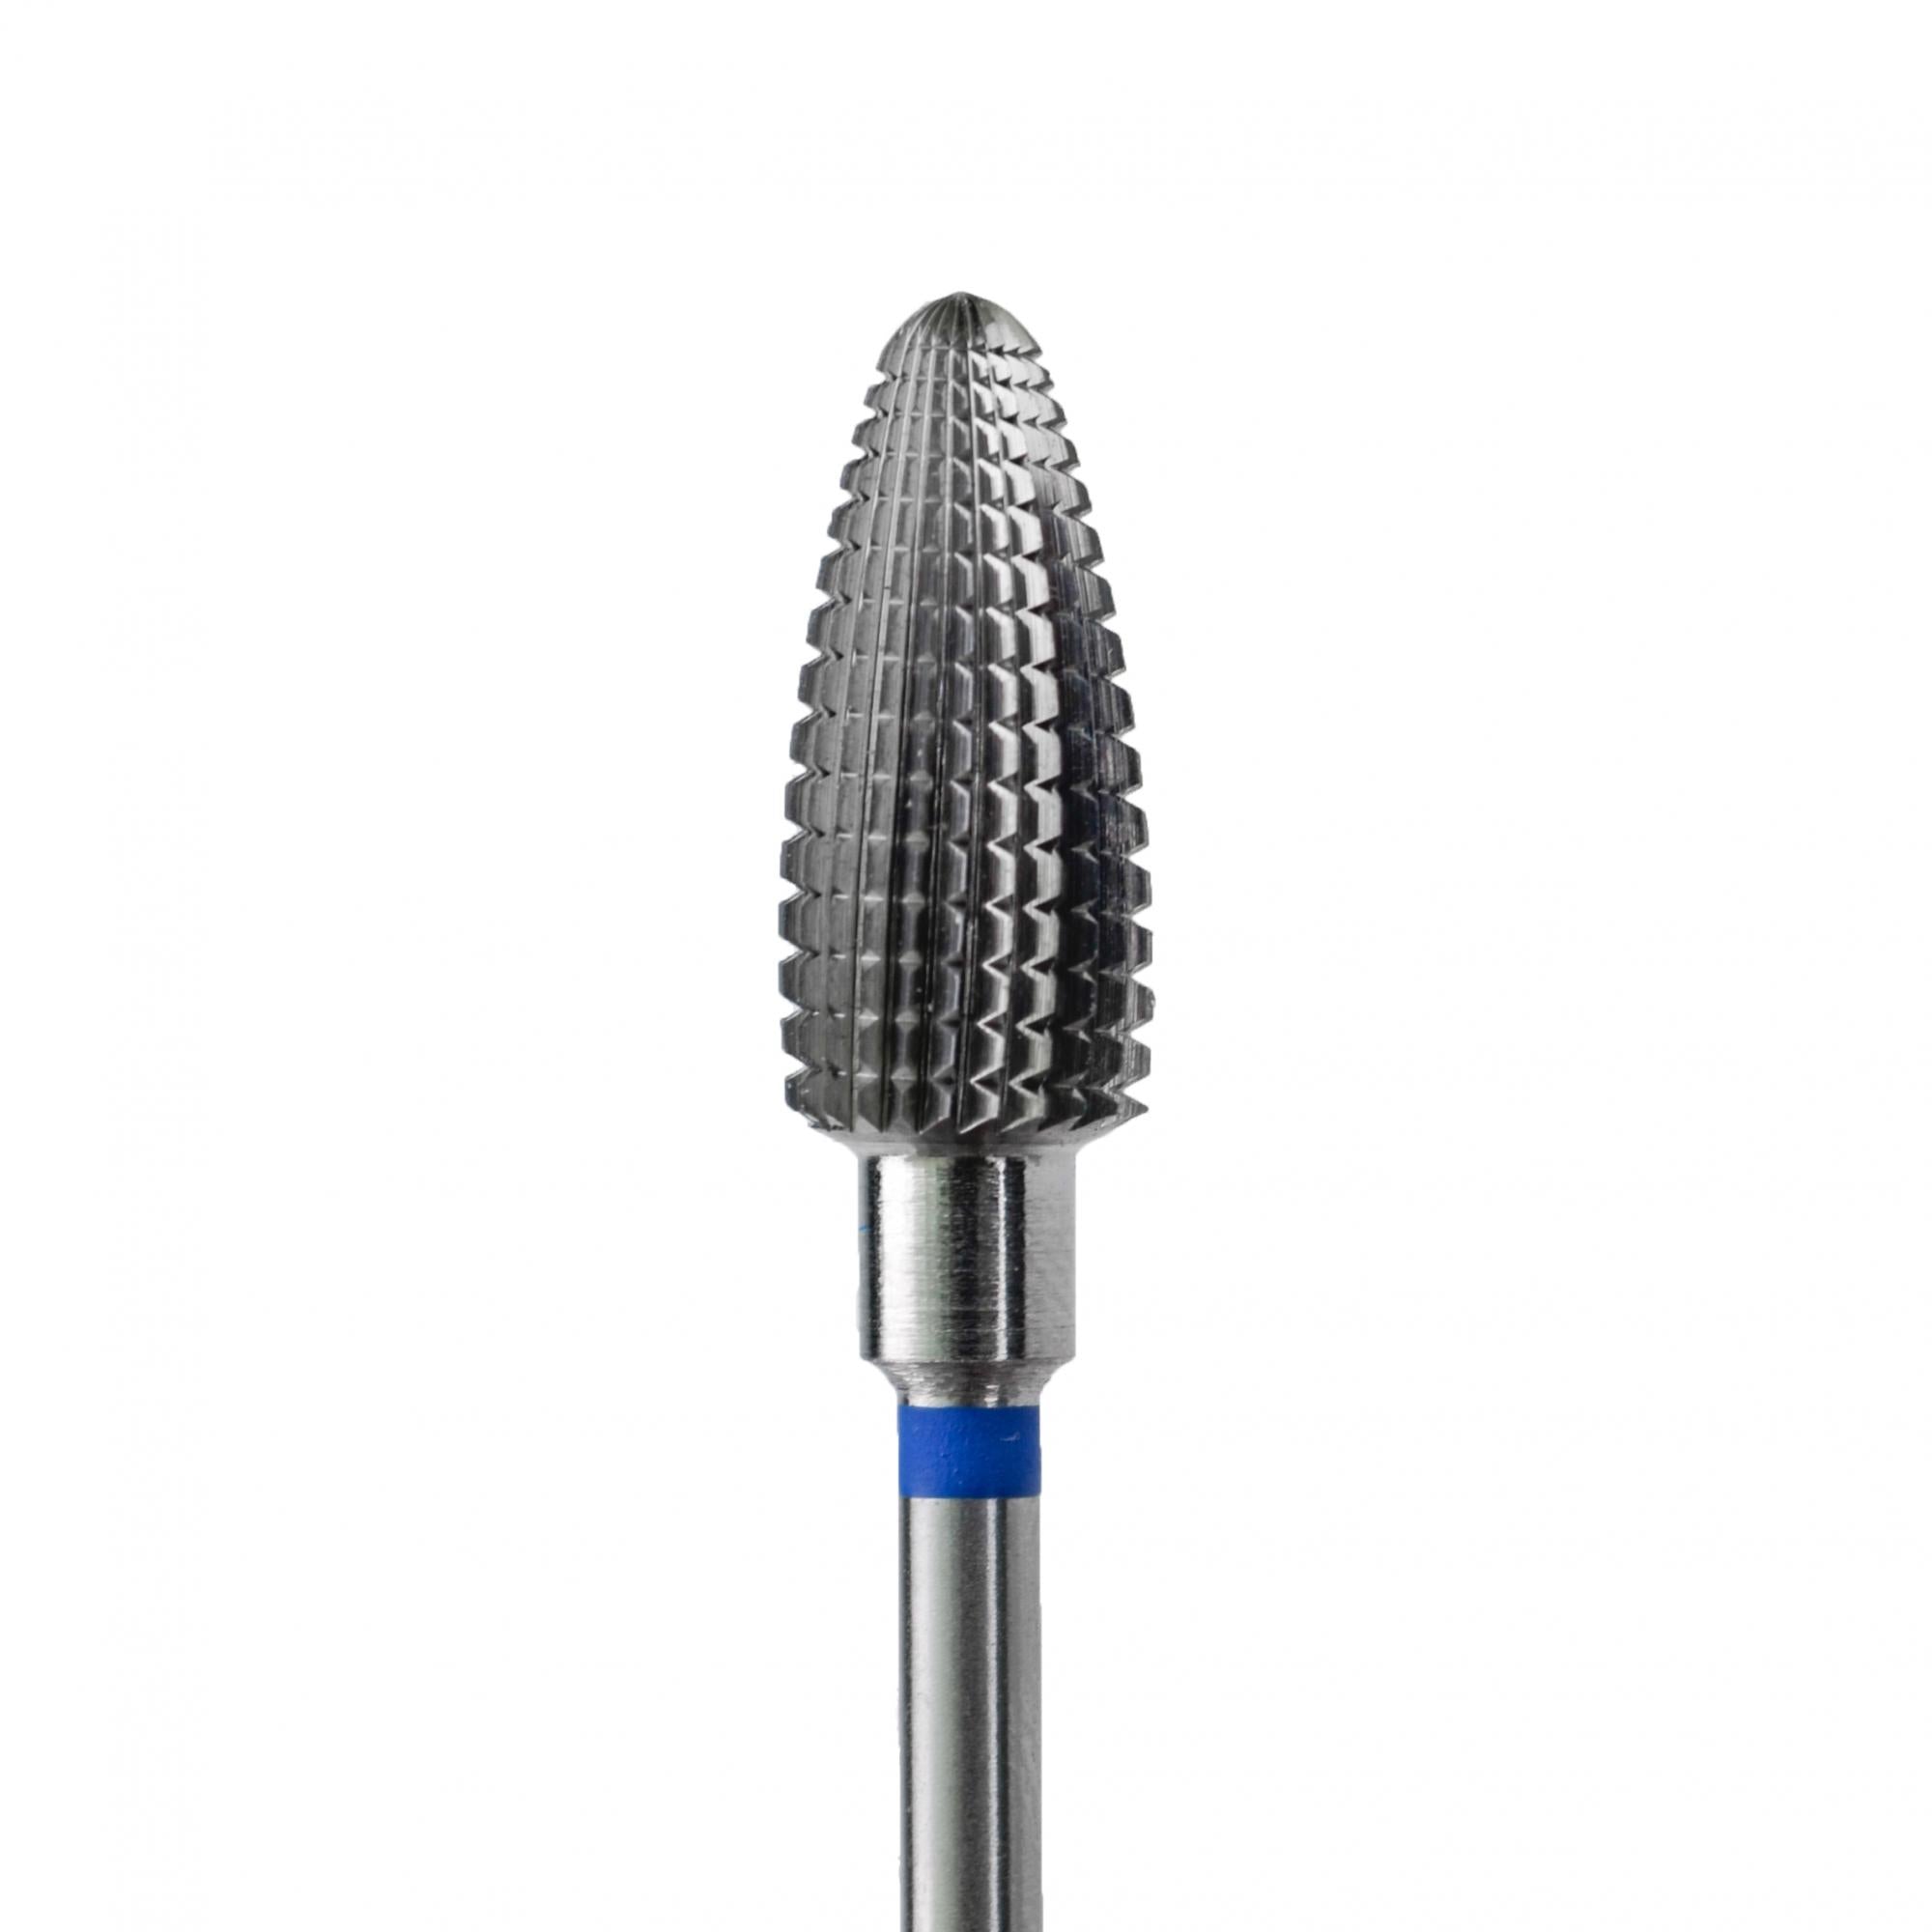 KMIZ Tungsten Carbide Cone E-File Nail Bit, 6.0mm, Blue